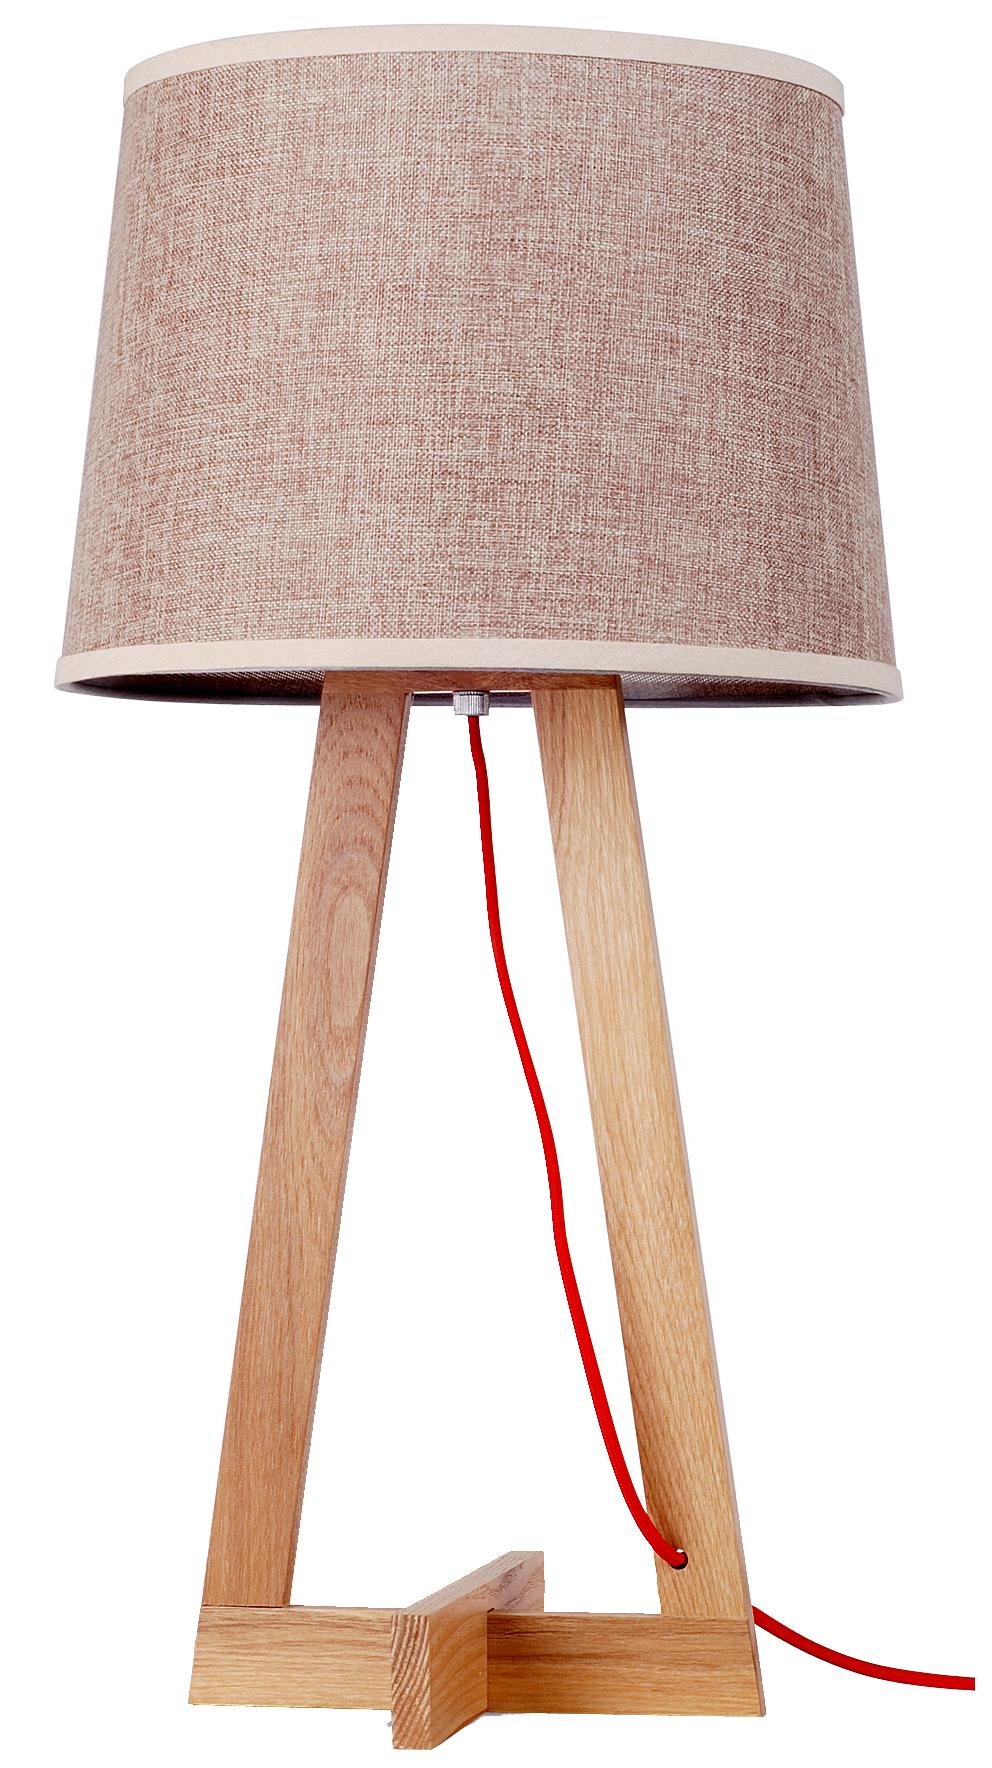 natural wood table lamp